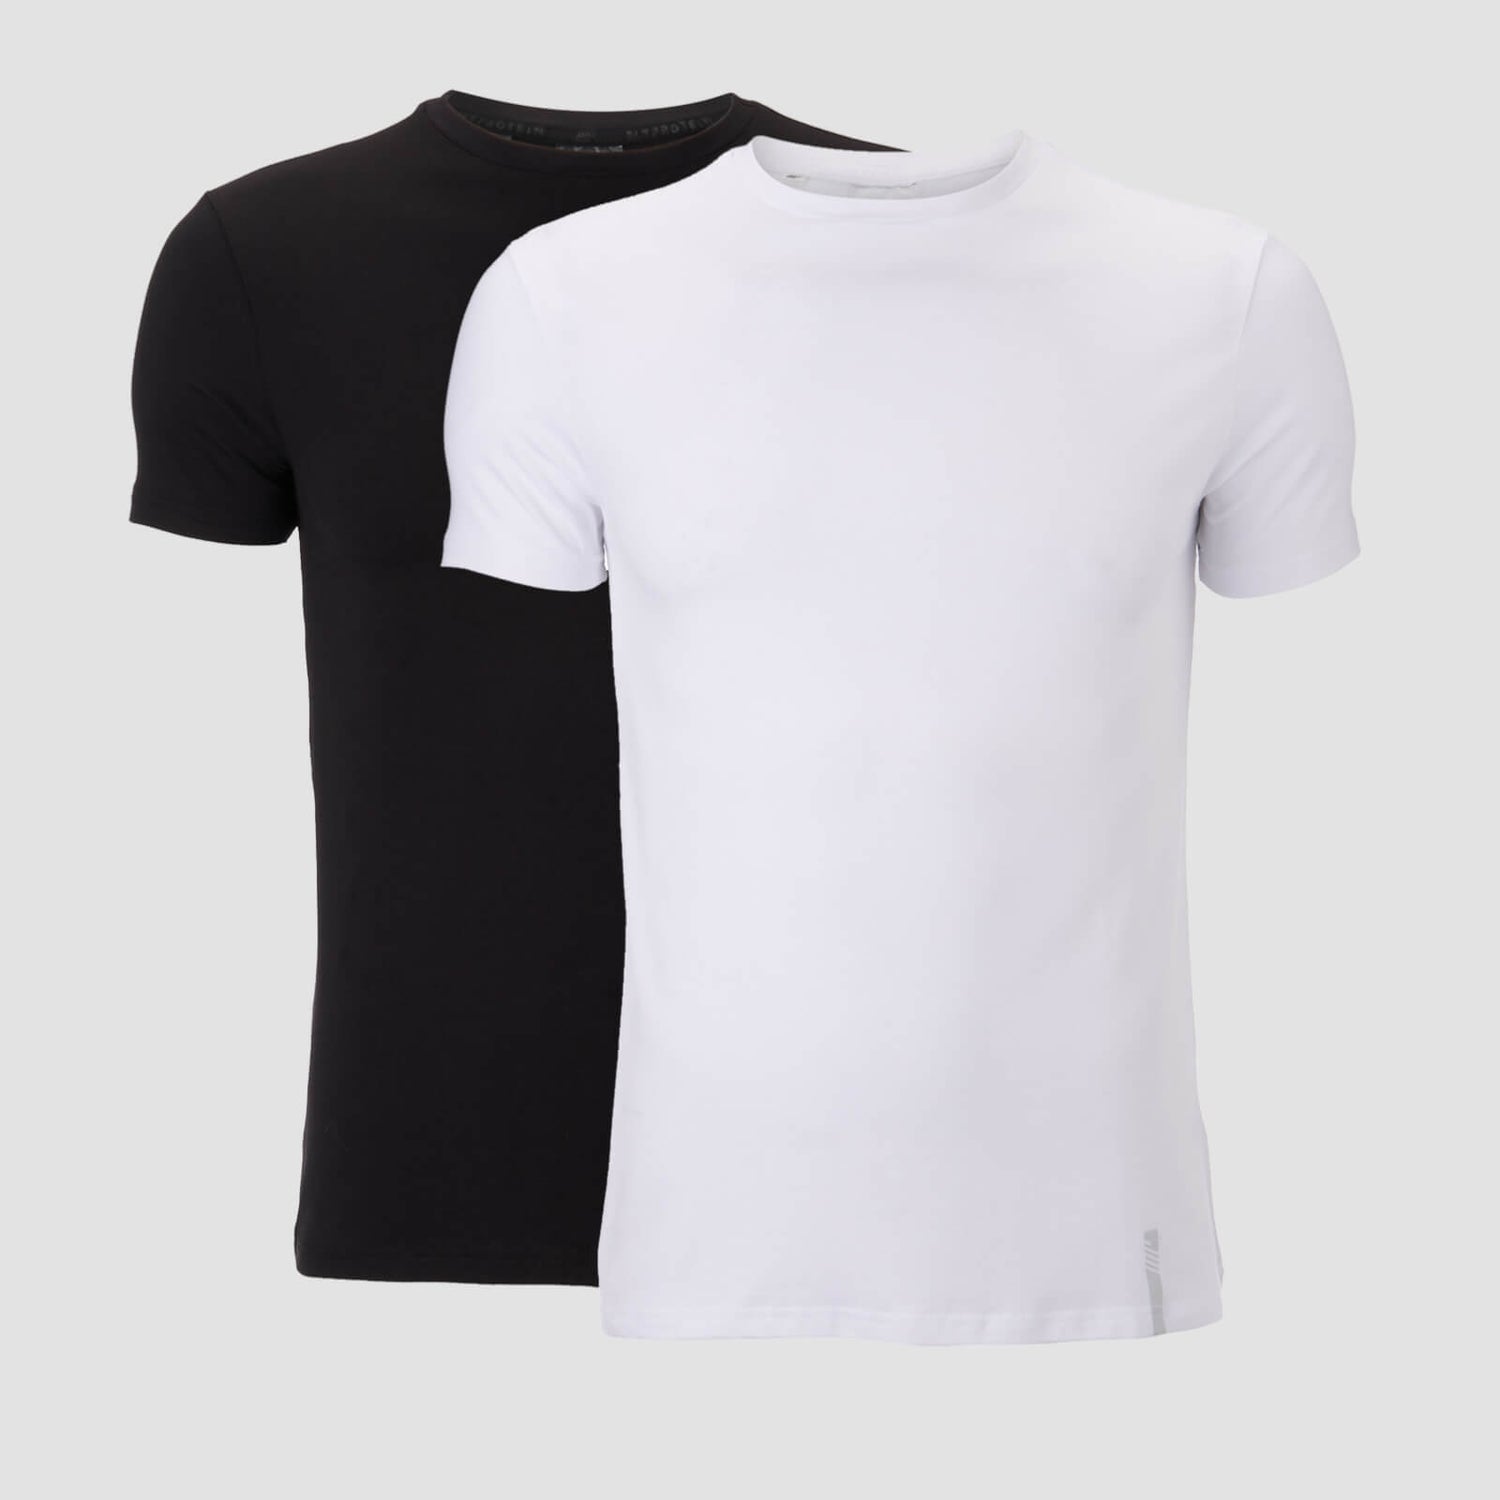 Klasyczne Koszulki z Kolekcji Luxe(2 Pack) - Czarna/Biała - M